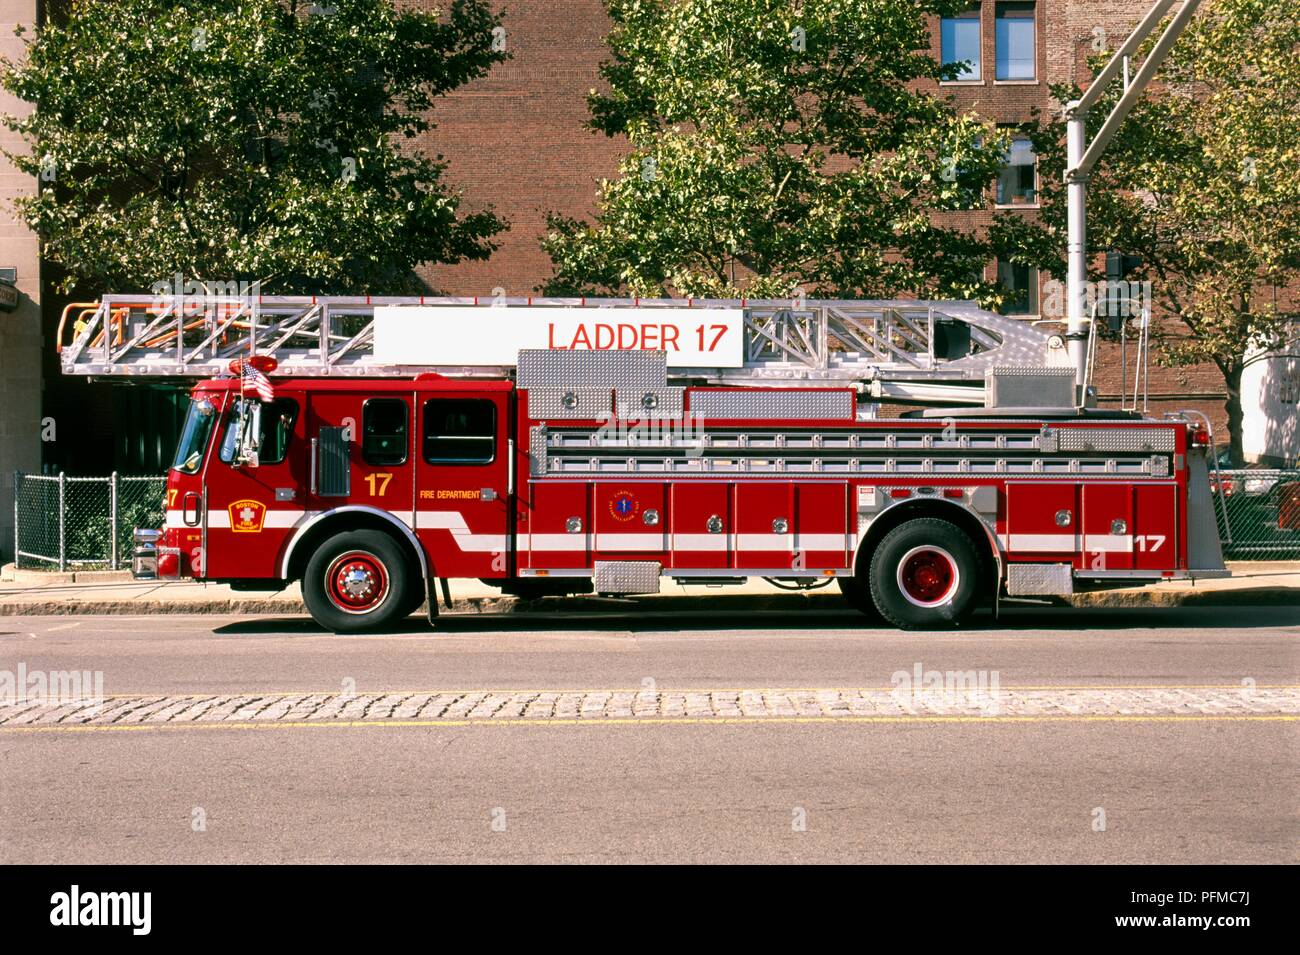 USA, Massachusetts, Boston, fire engine parked in street Stock Photo